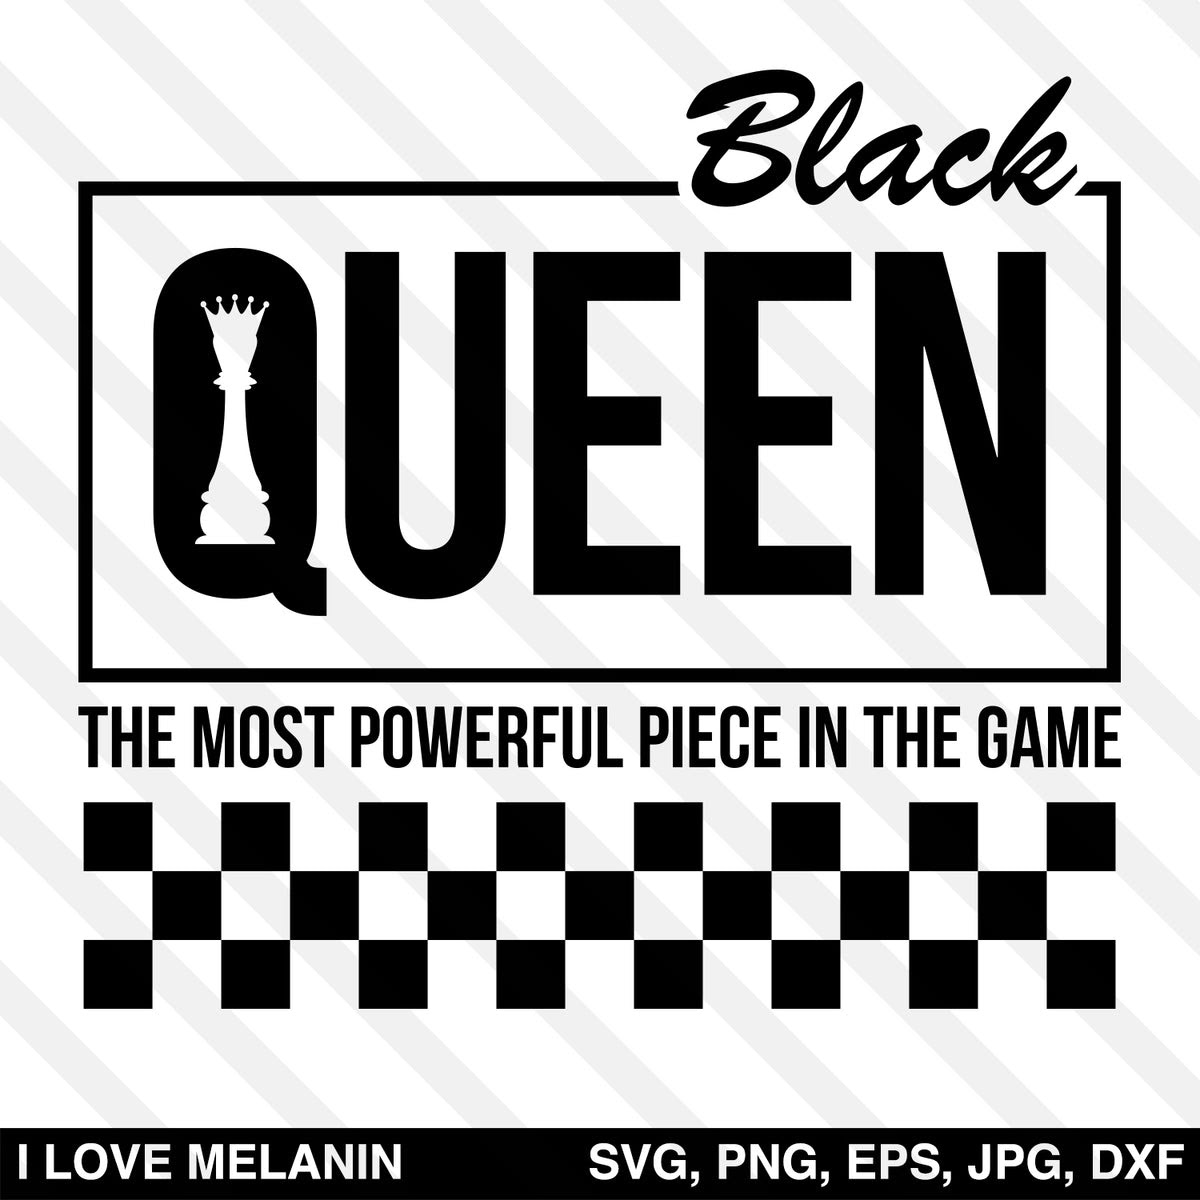 Download Black Queen Chess Checkered SVG - I Love Melanin